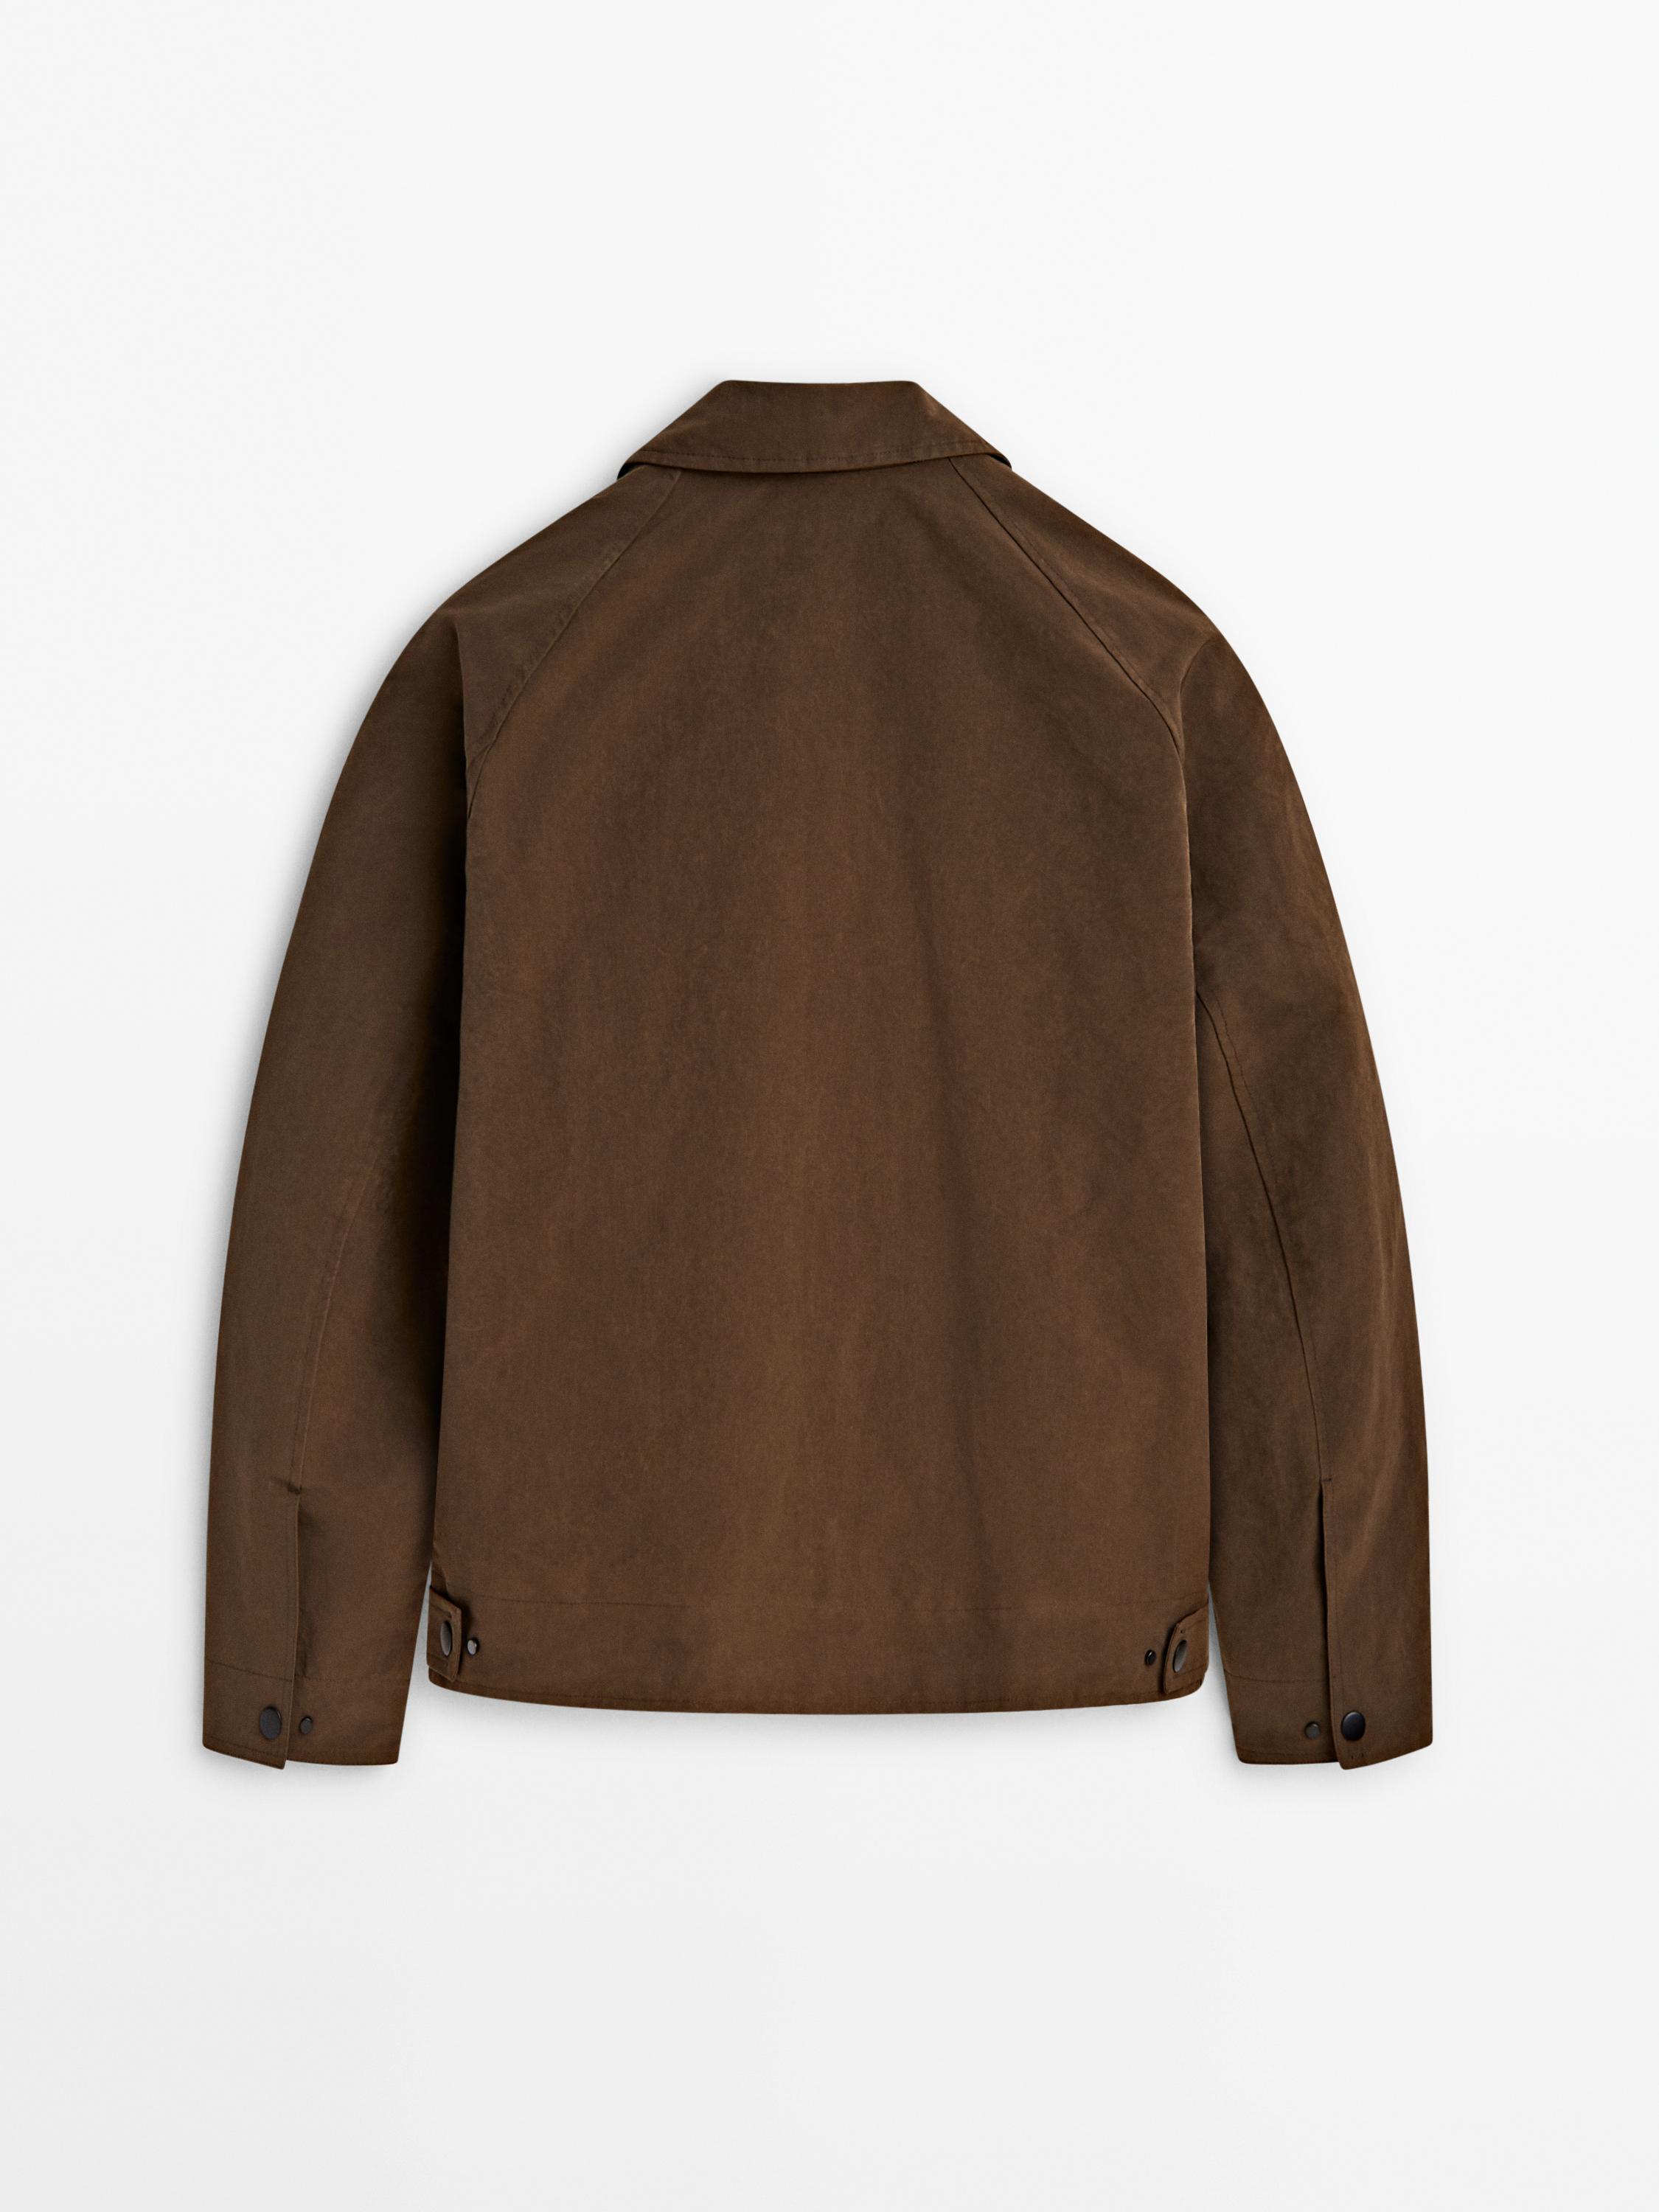 2-in-1 jacket with pockets - Studio - Toffee | ZARA Canada